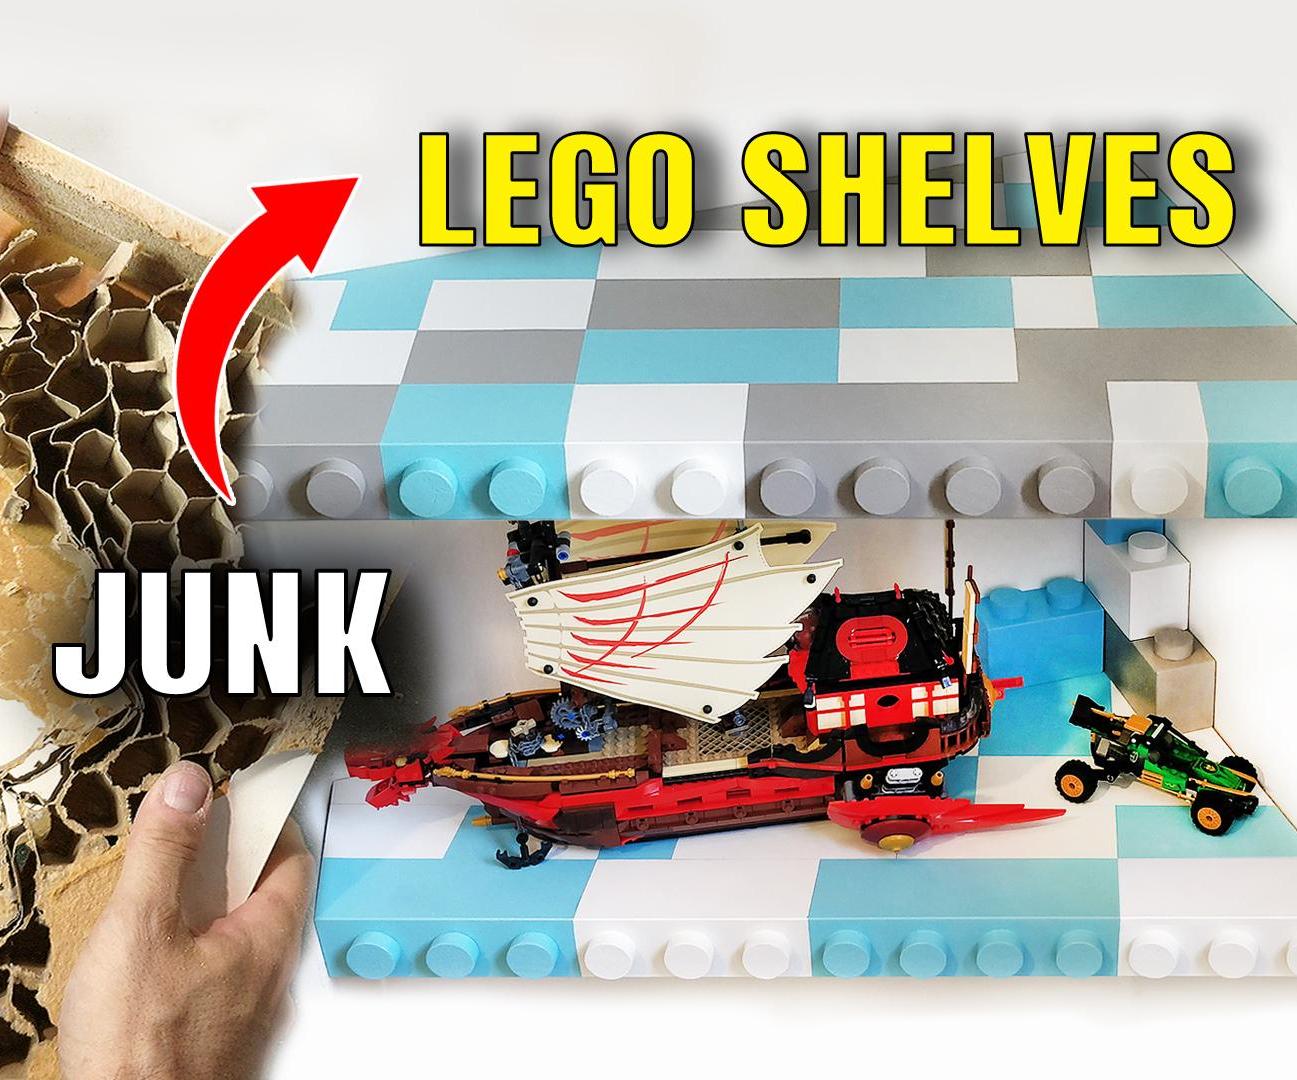 LEGO Display Shelf - LEGO Shaped Floating Shelves Made From Trash